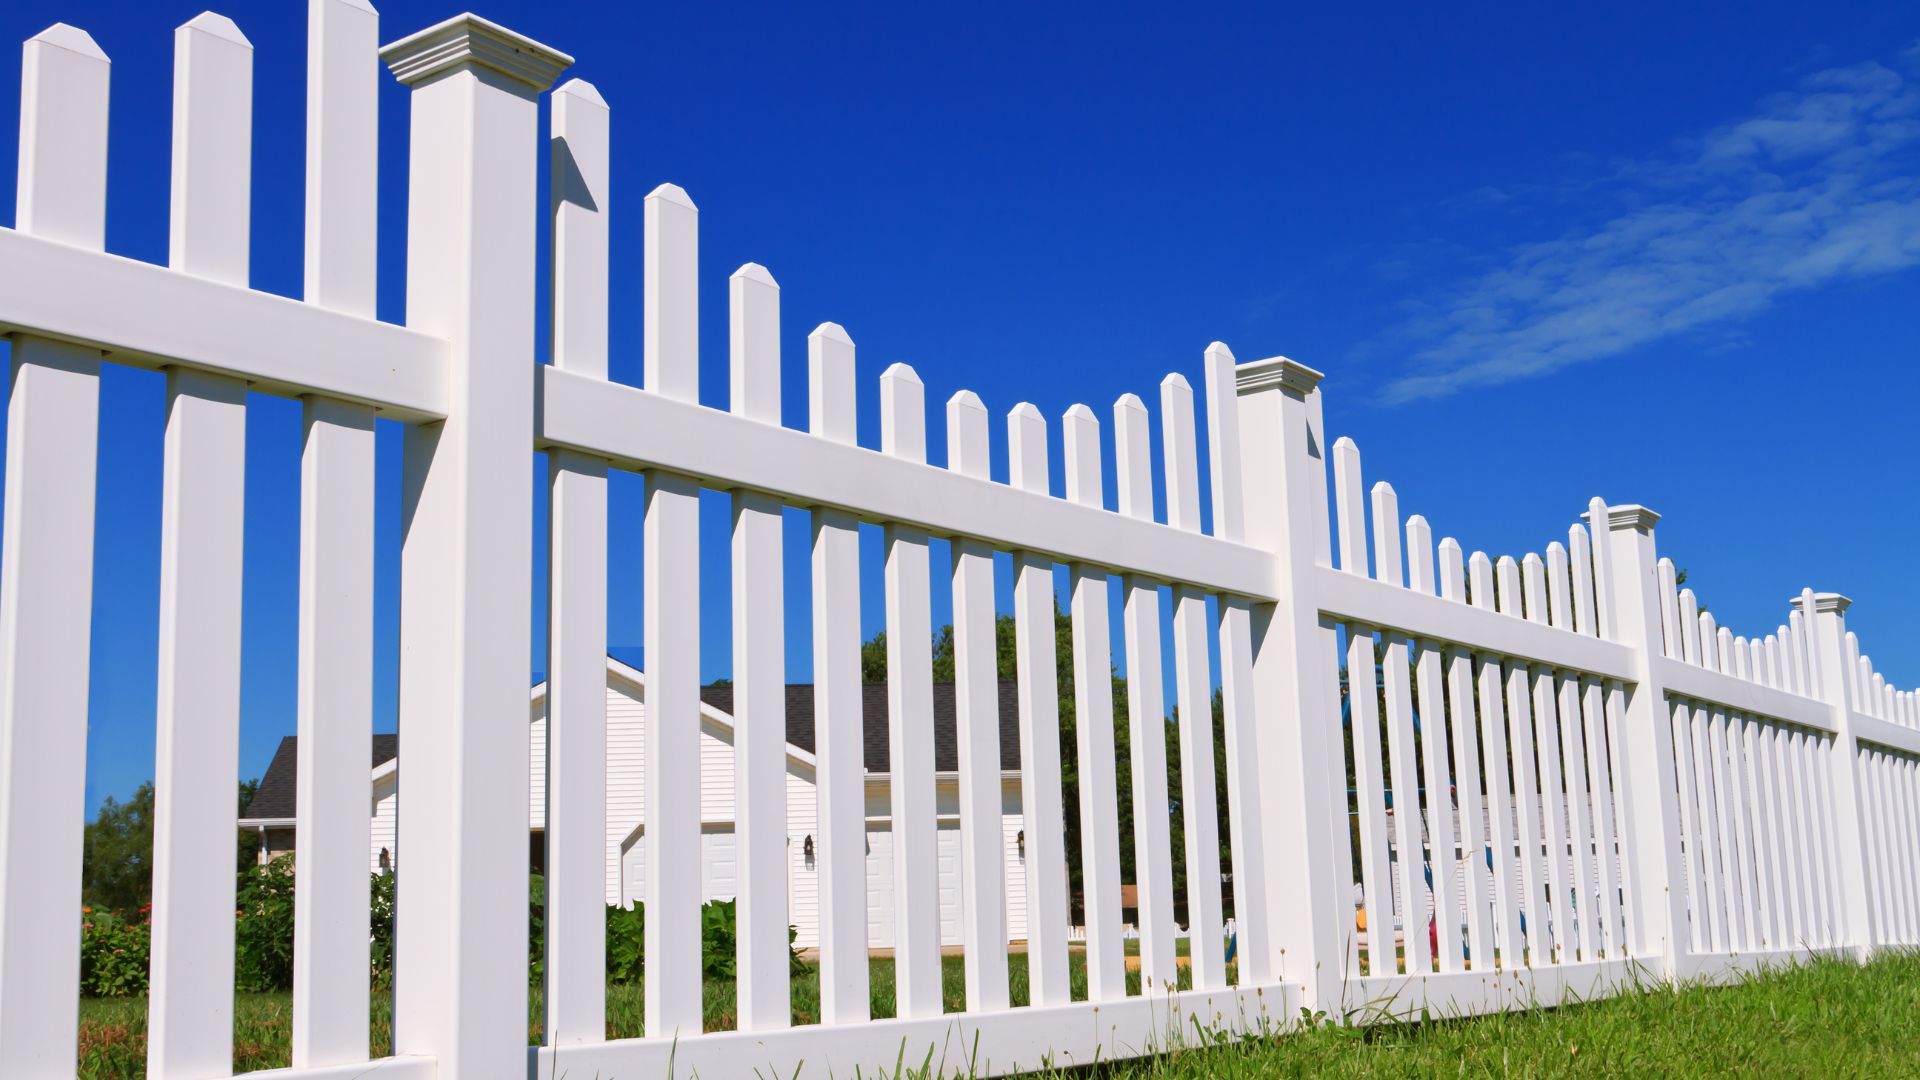 vinyl picket fence